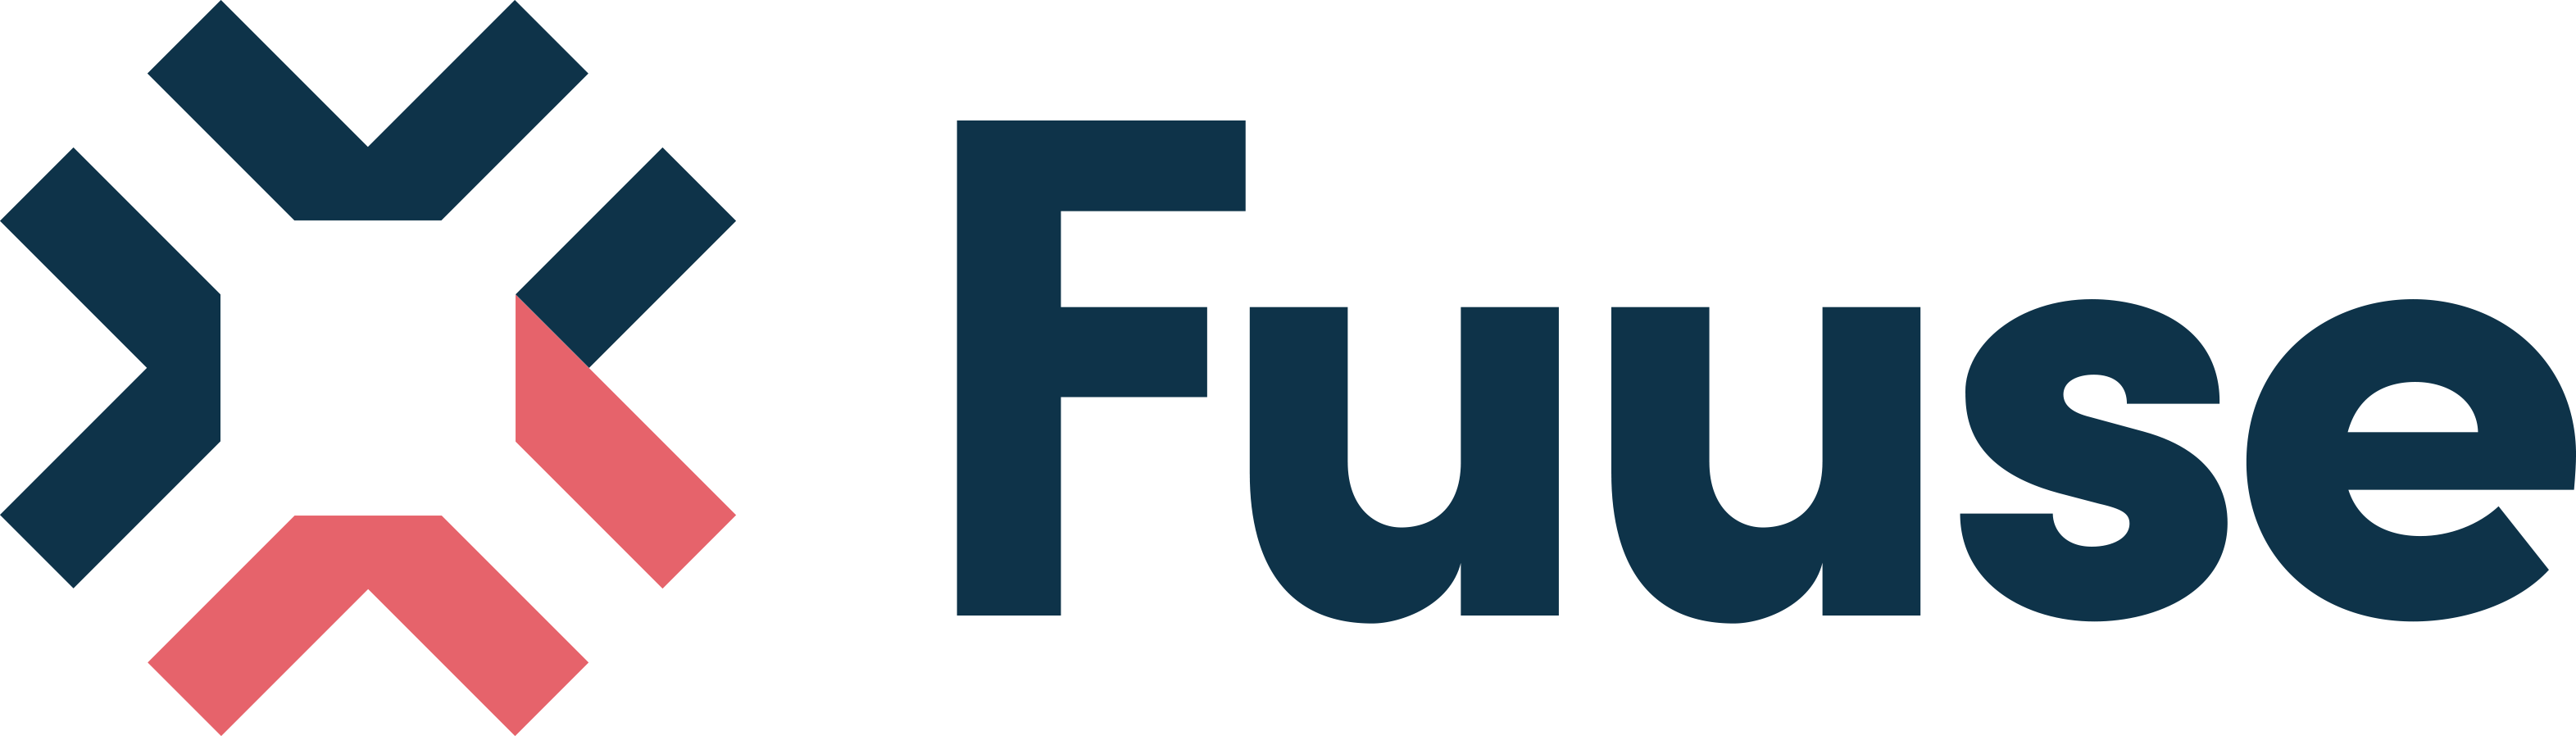 fuuse_logo